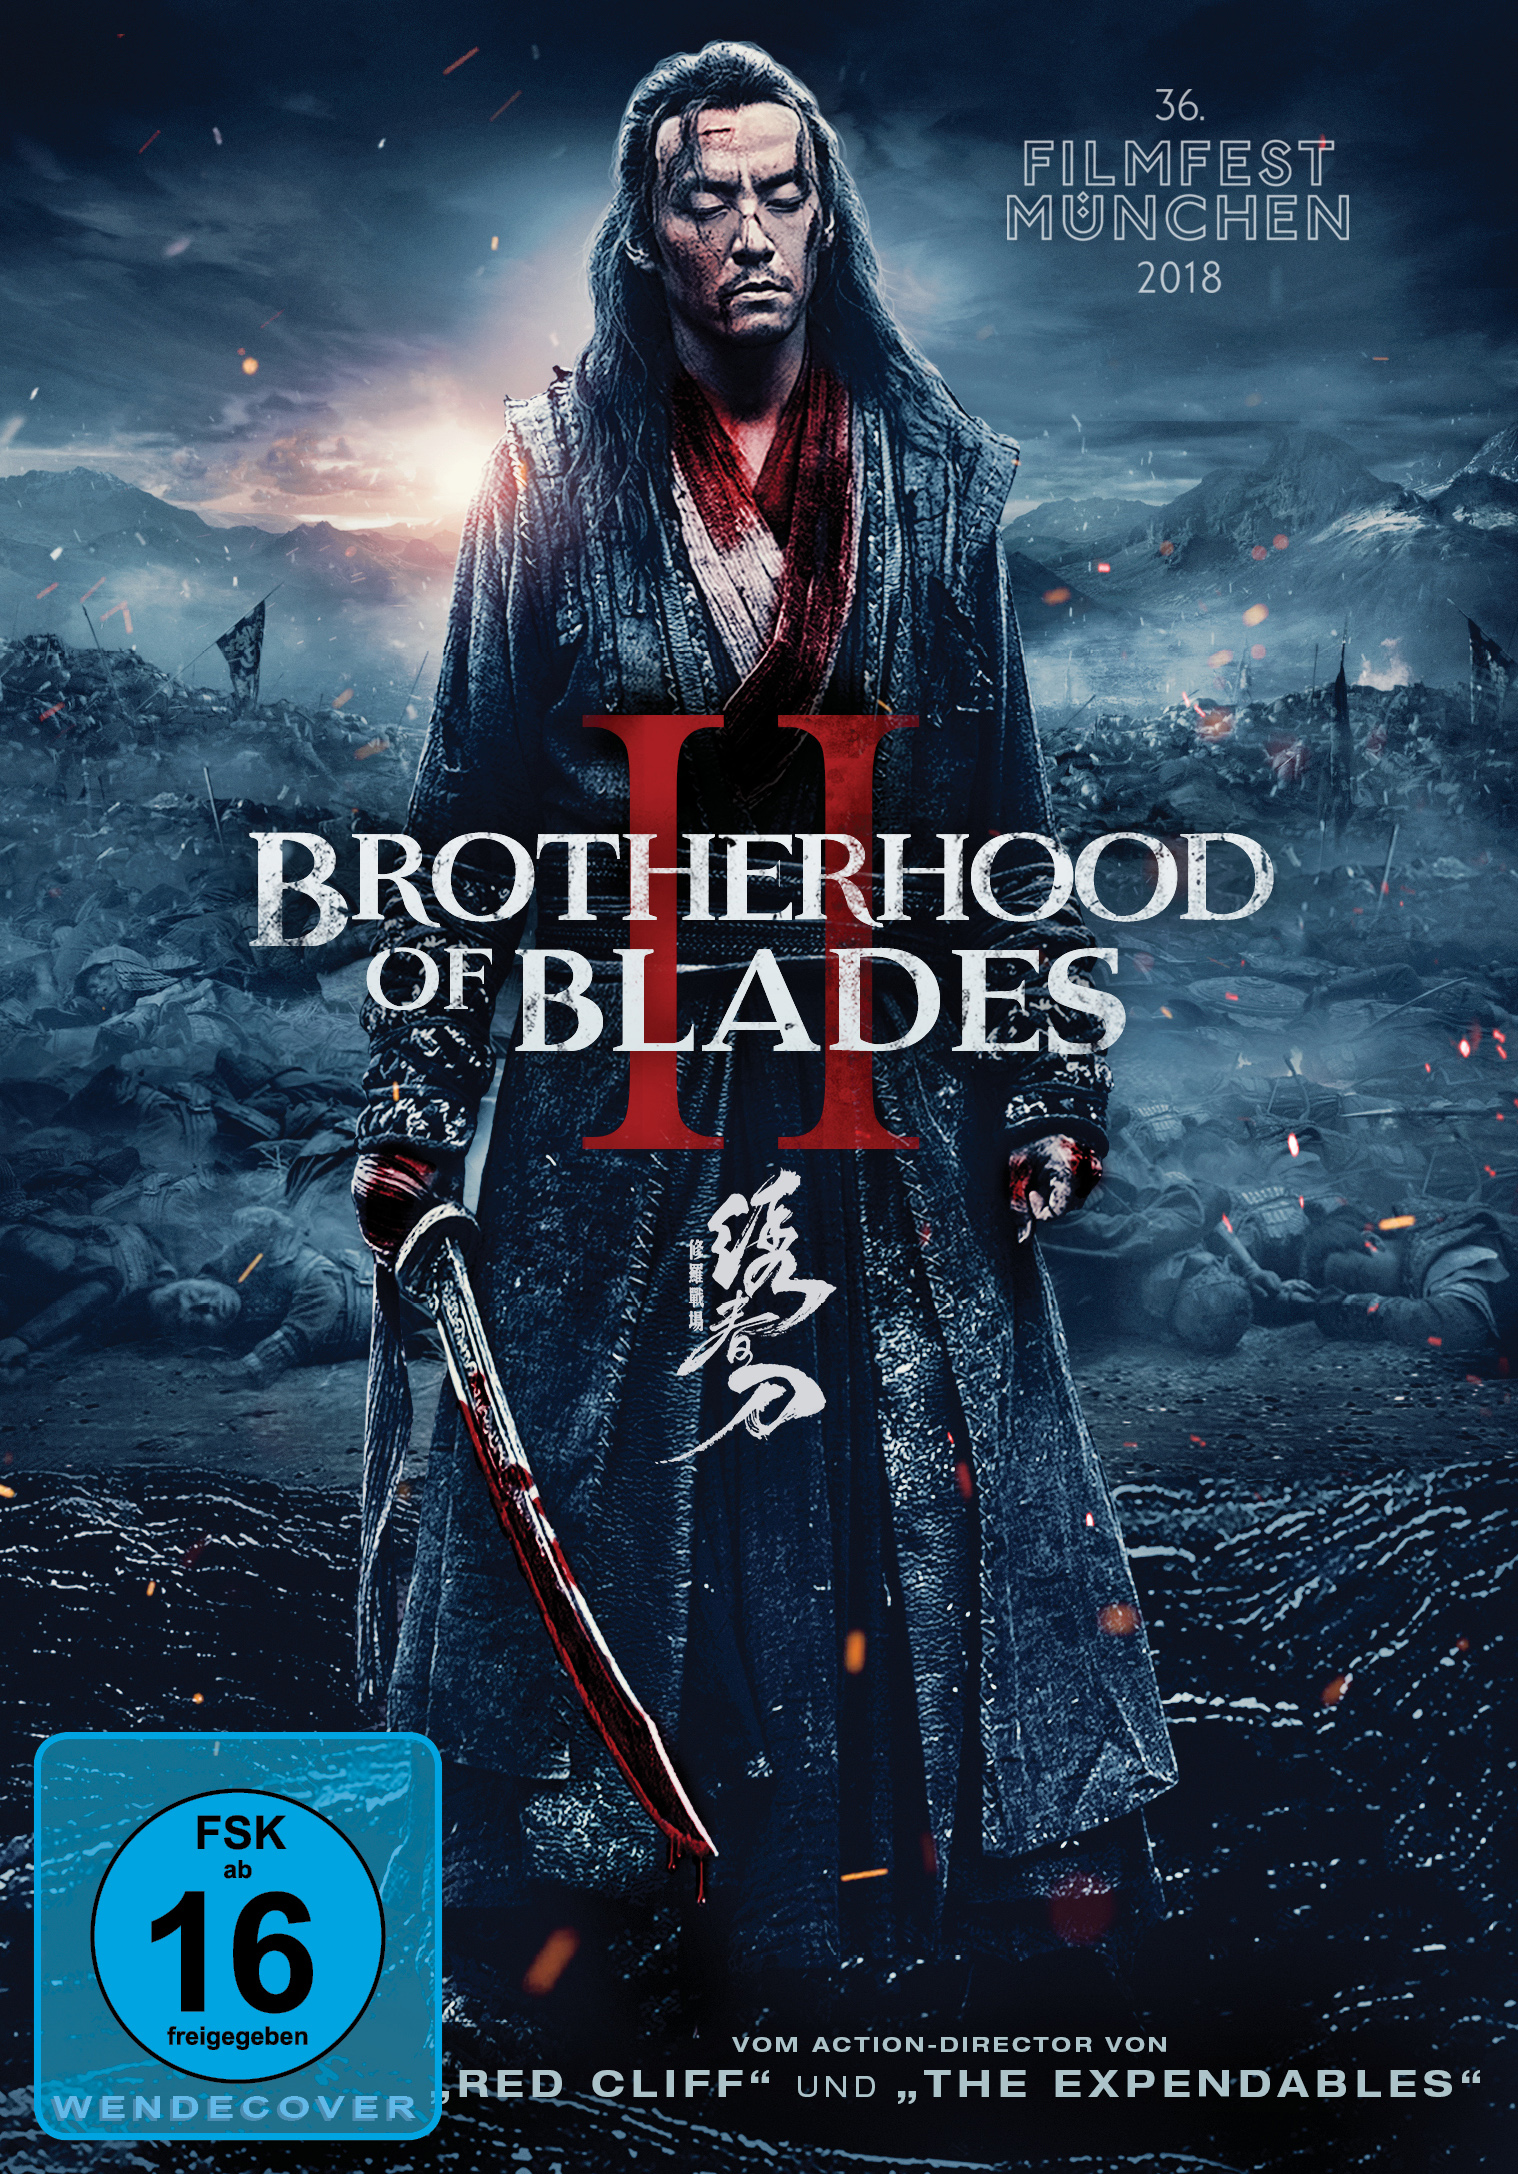 Brotherhood Of Blades 2 DVD